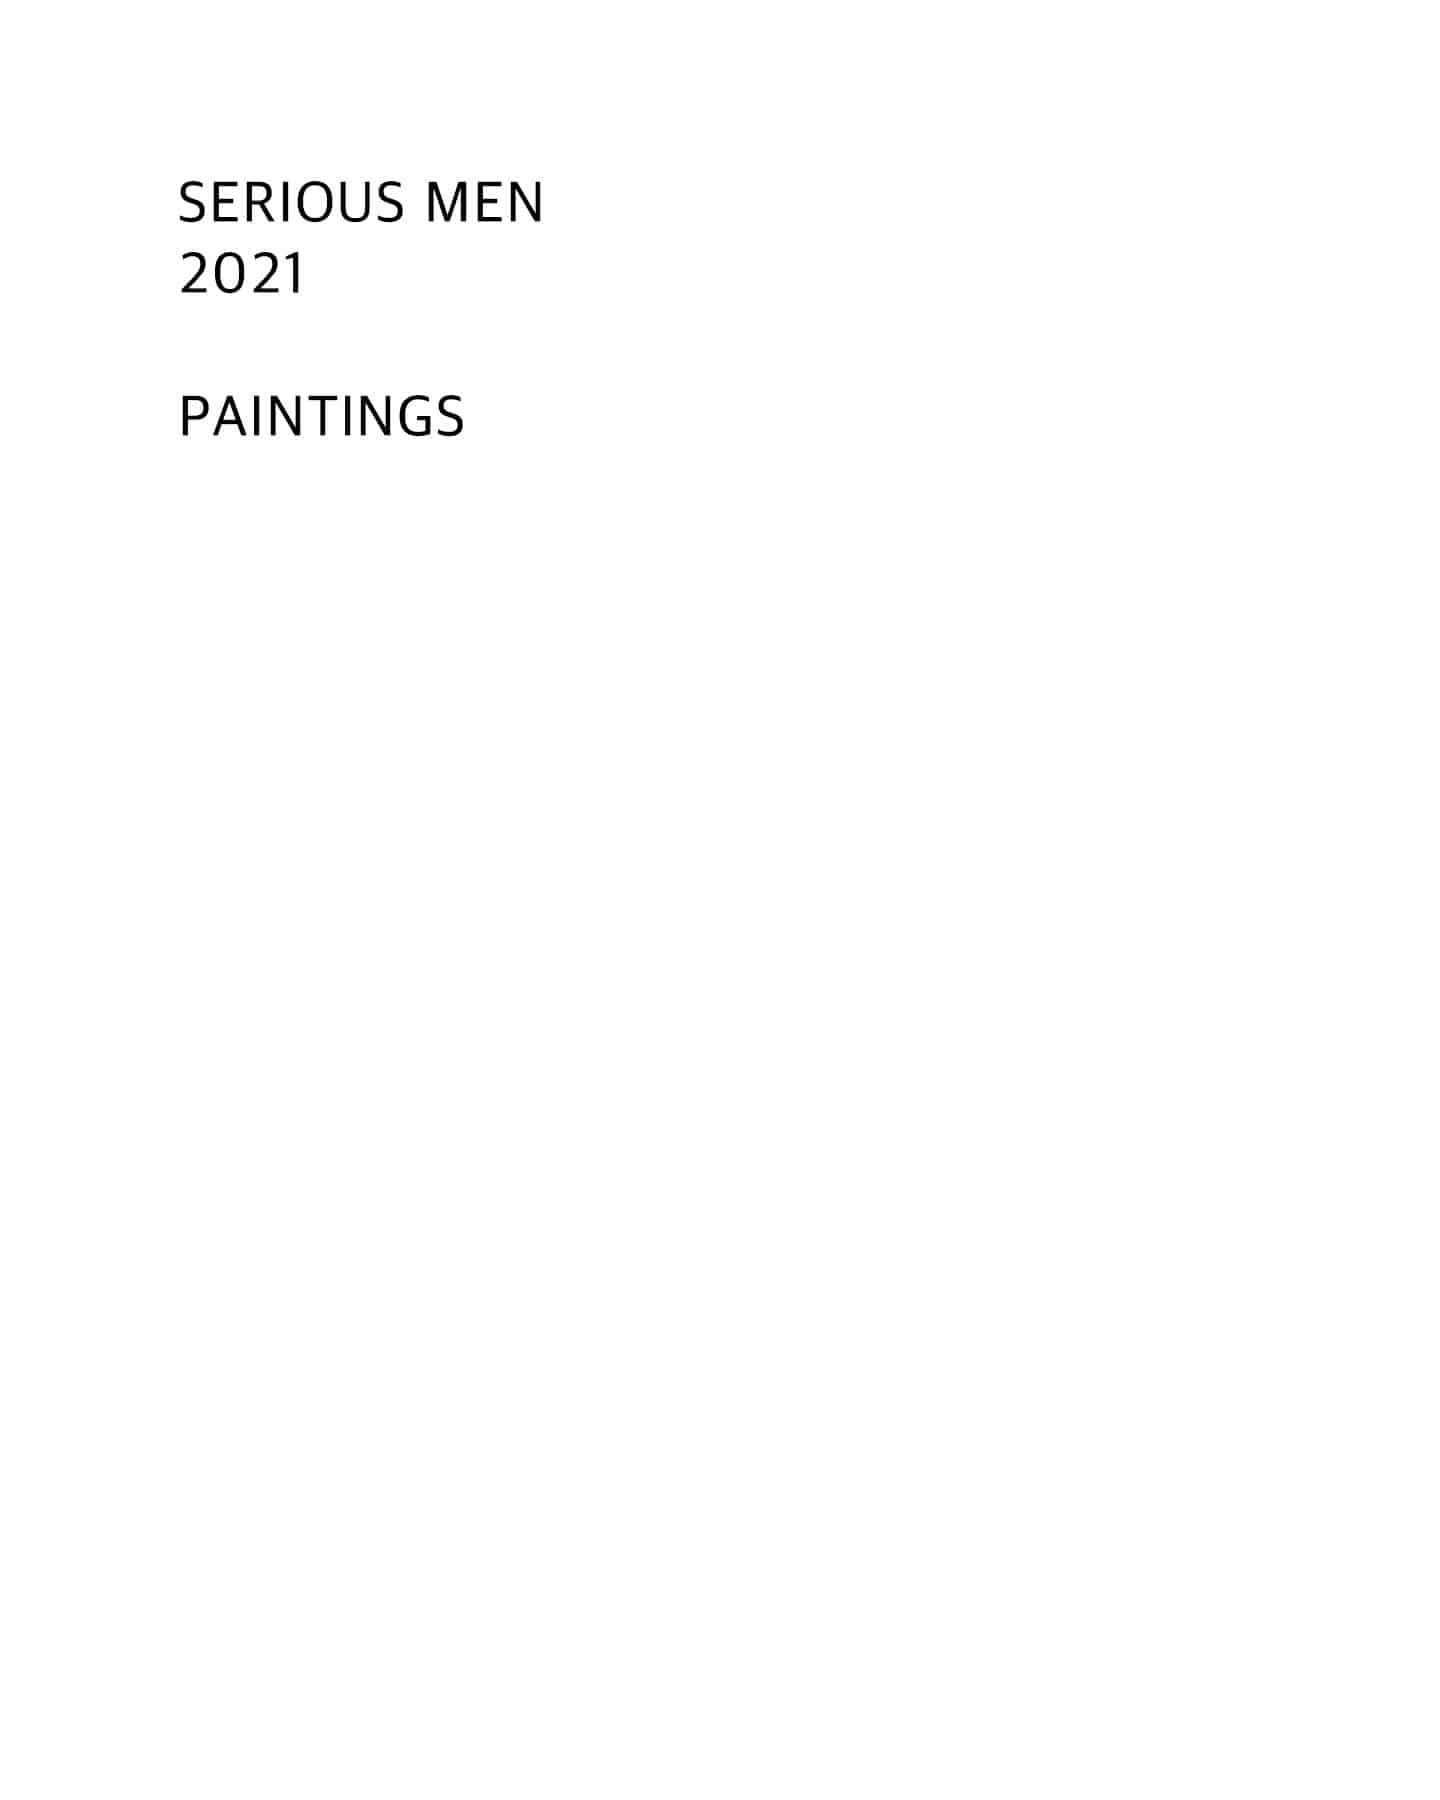 SERIOUS MEN 2021, paintings